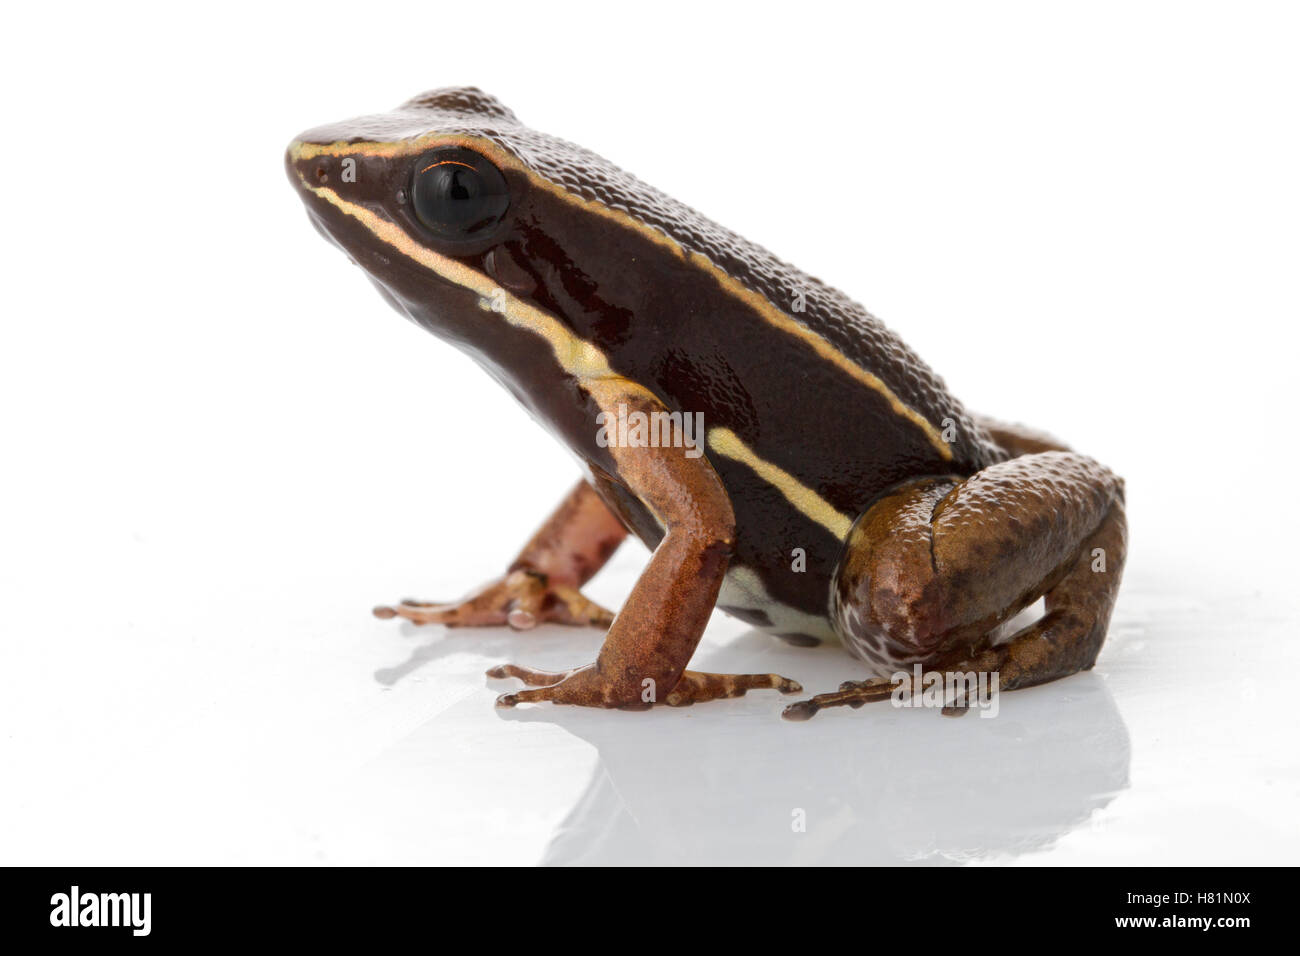 Brilliant-thighed Poison Frog (Epipedobates femoralis), Suriname Stock Photo